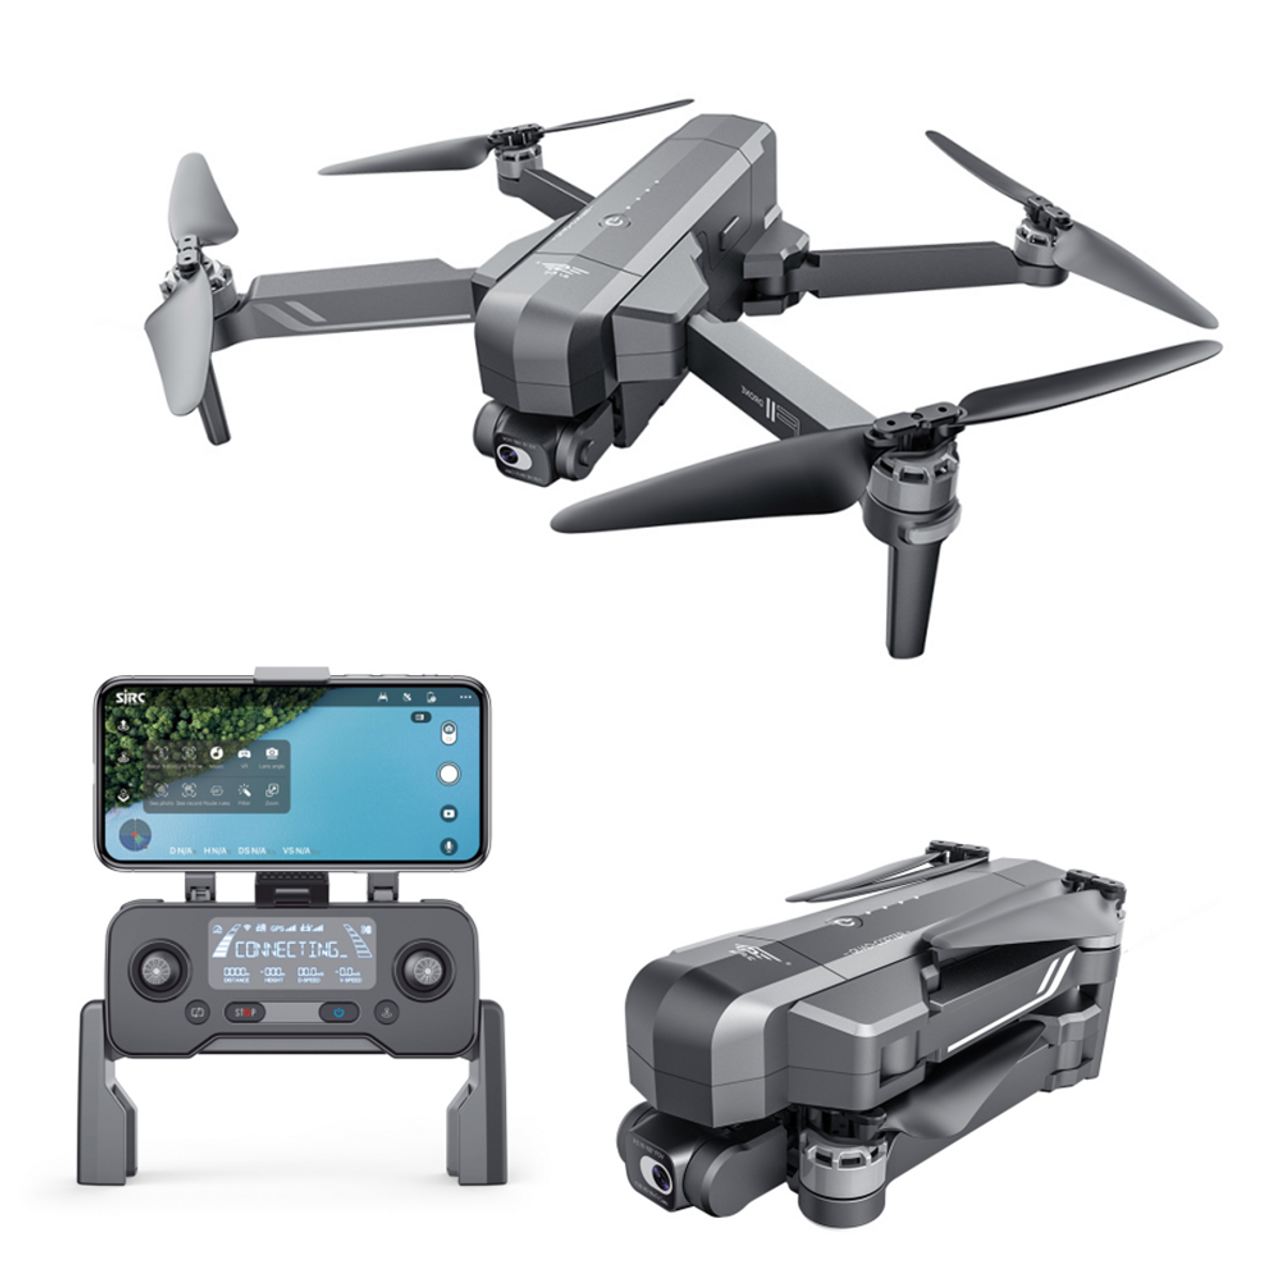 Achetez en gros Hoshi Sjrc F11s 4k Pro Drone Caméra Gps 5g Fpv Hd